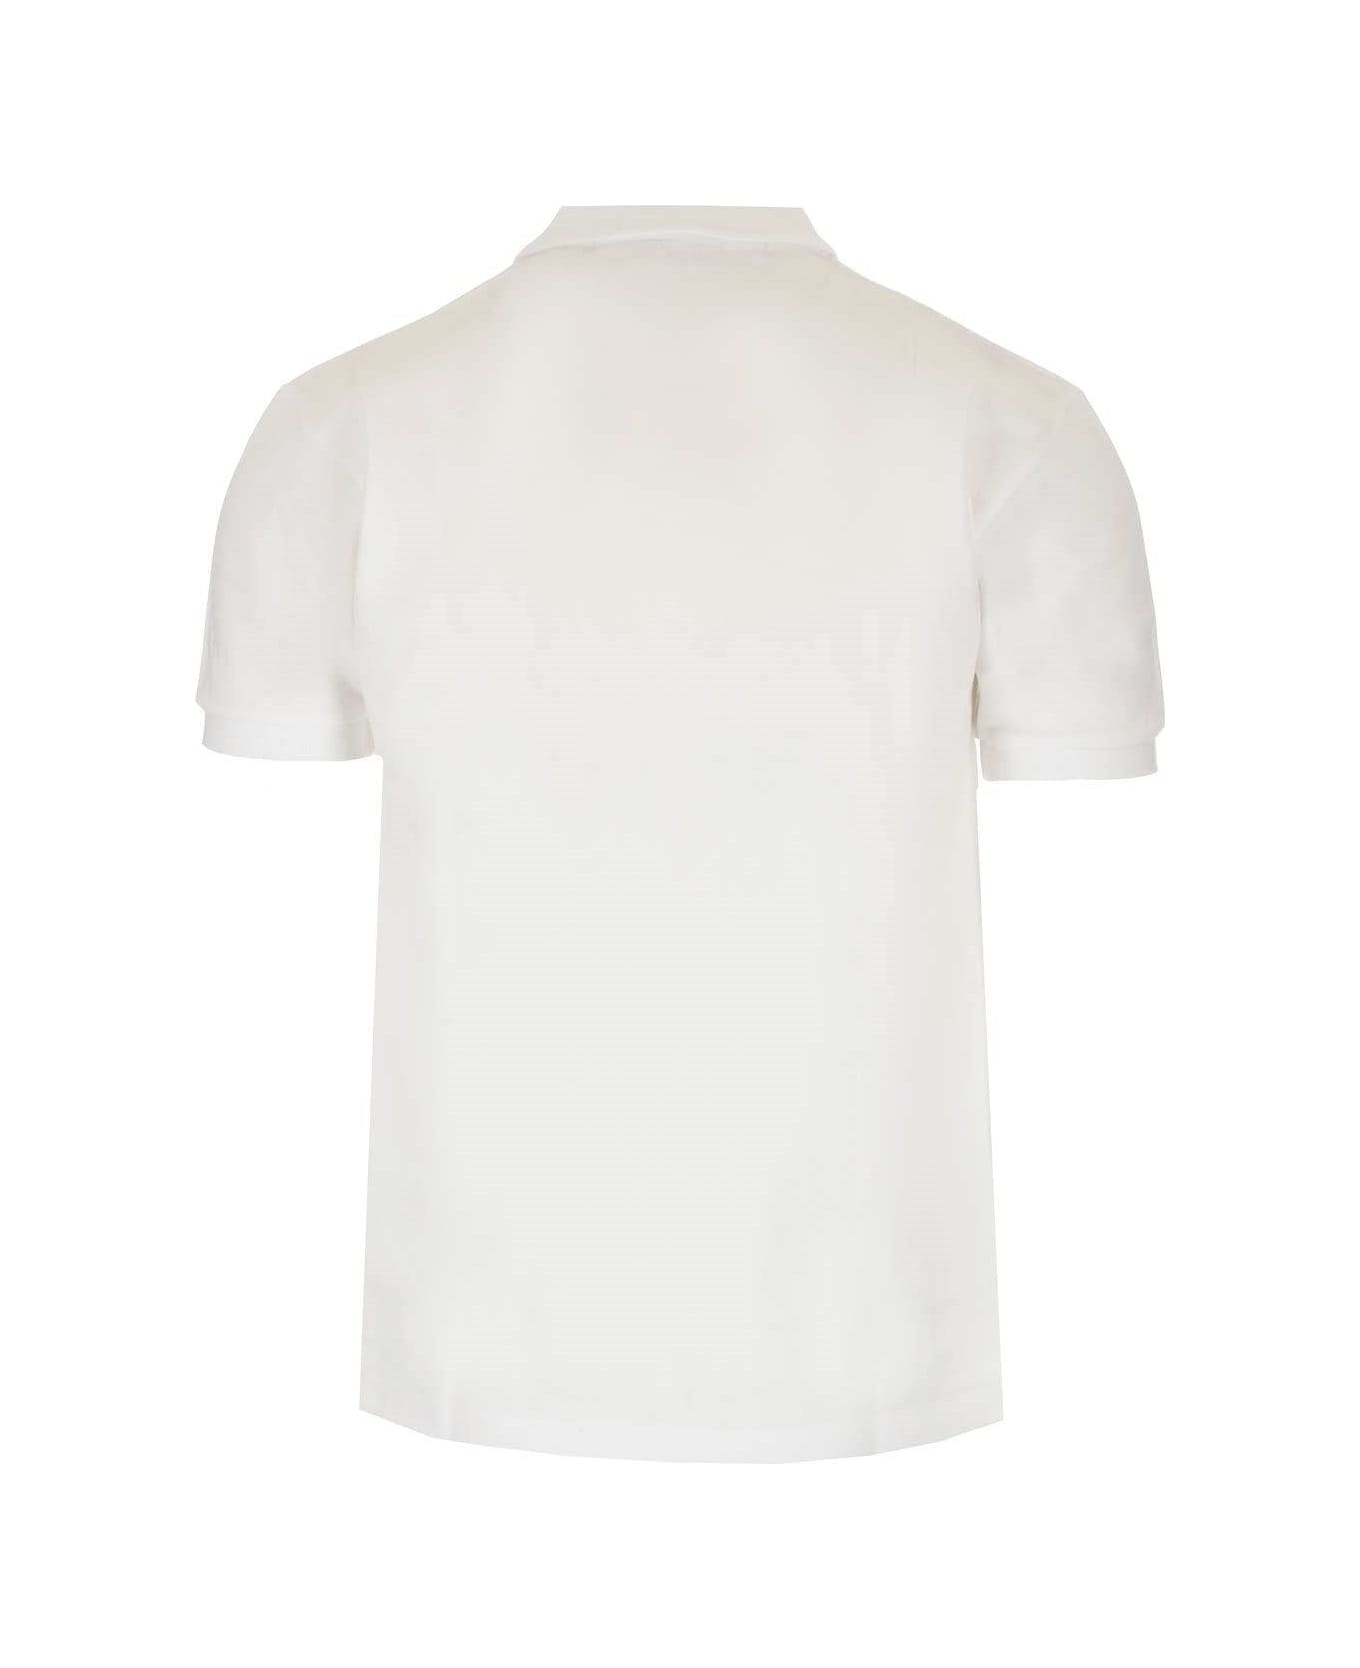 Comme des Garçons Play Heart Logo Patch Polo Shirt - White